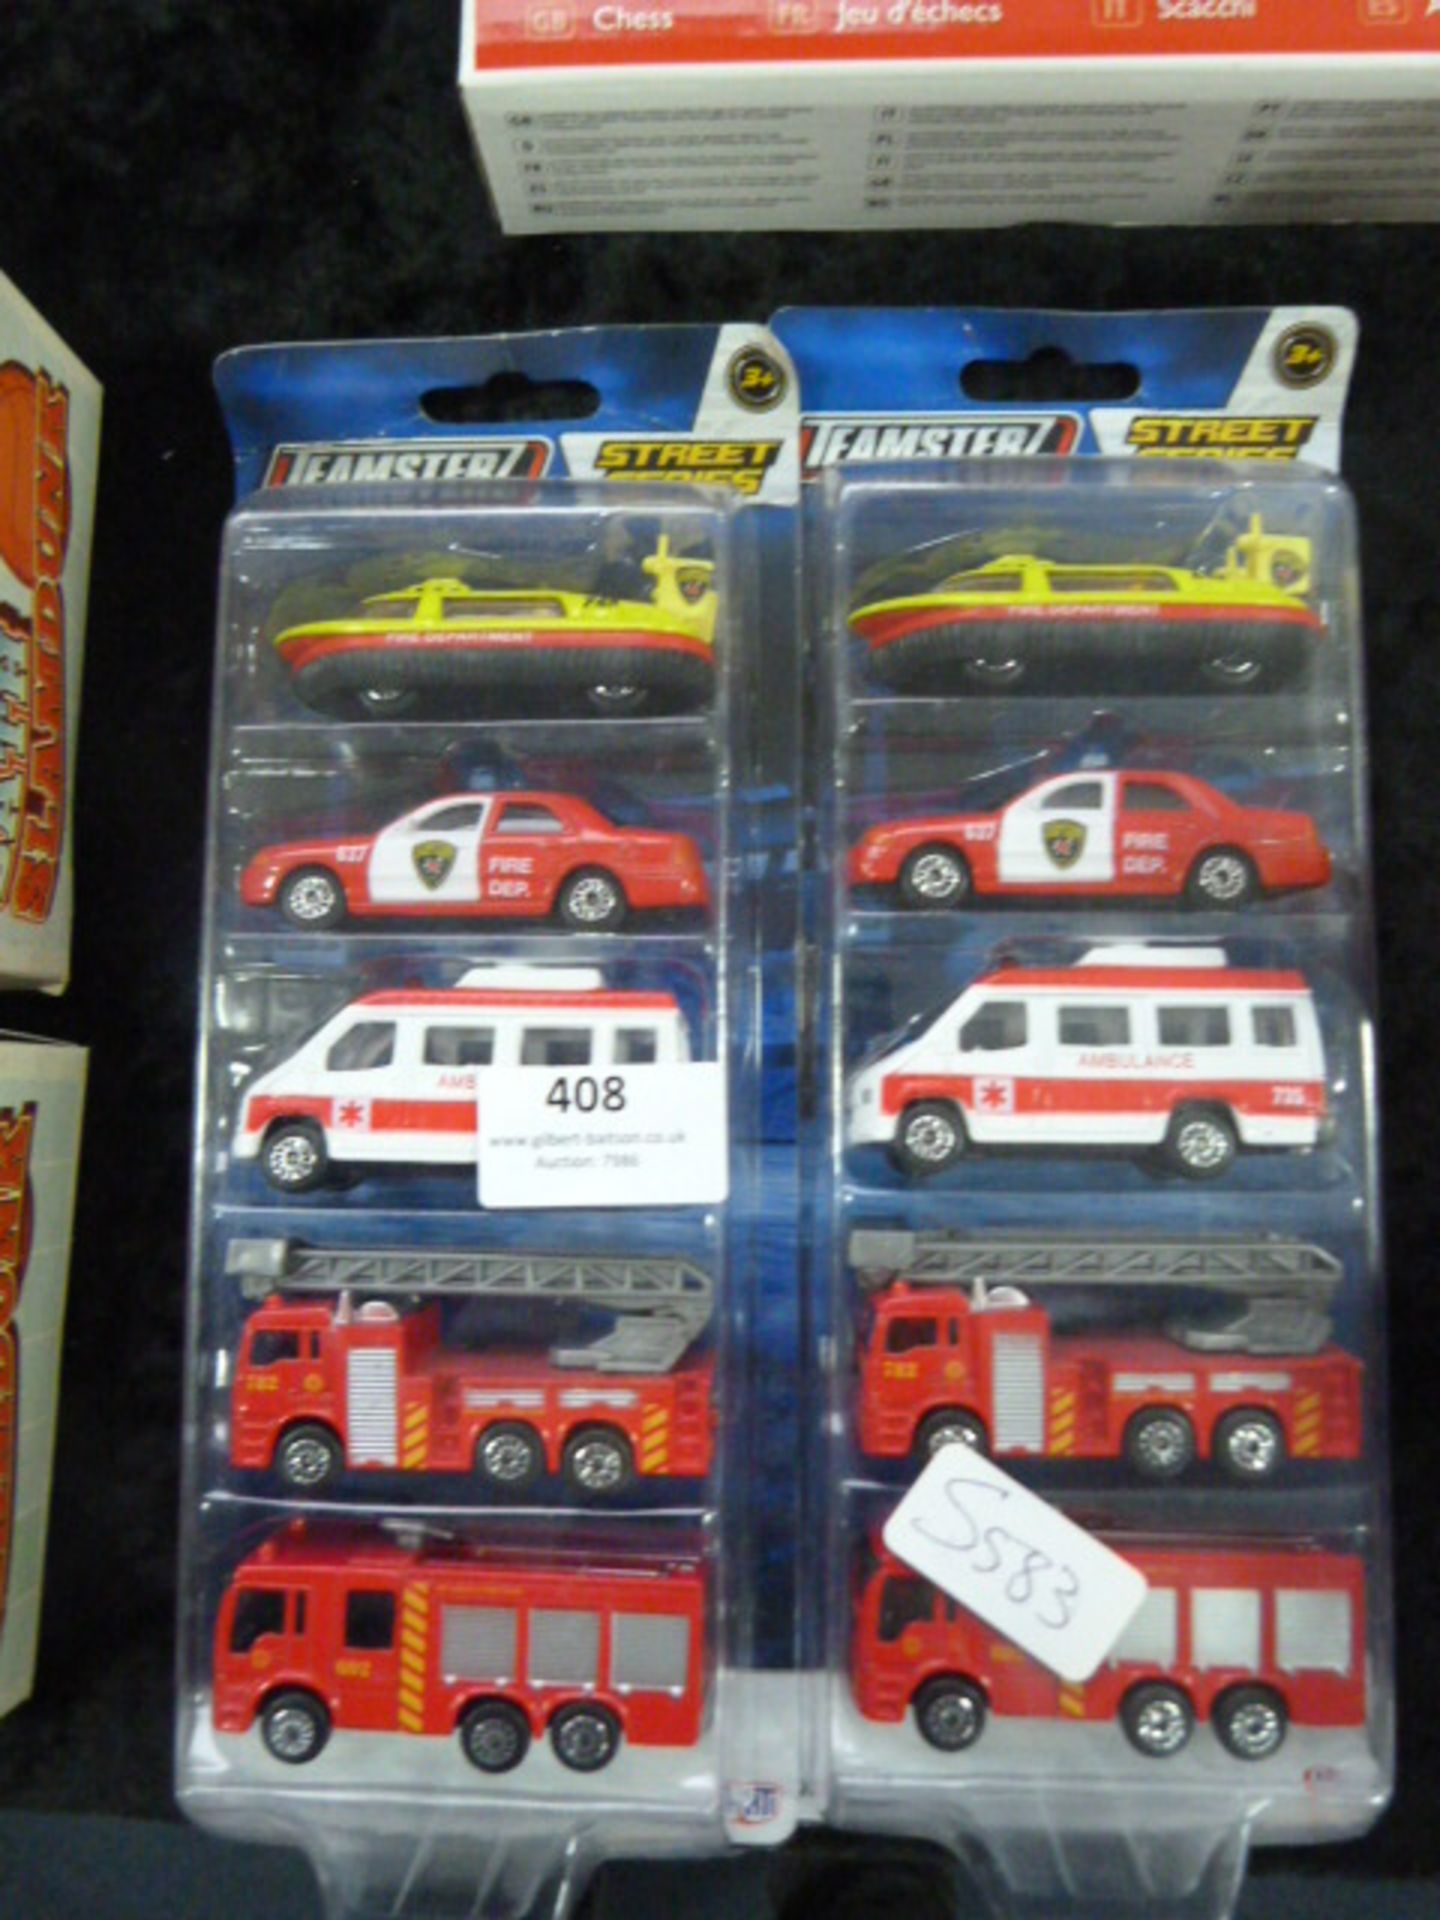 *Two Teamster Diecast Model Emergency Vehicles